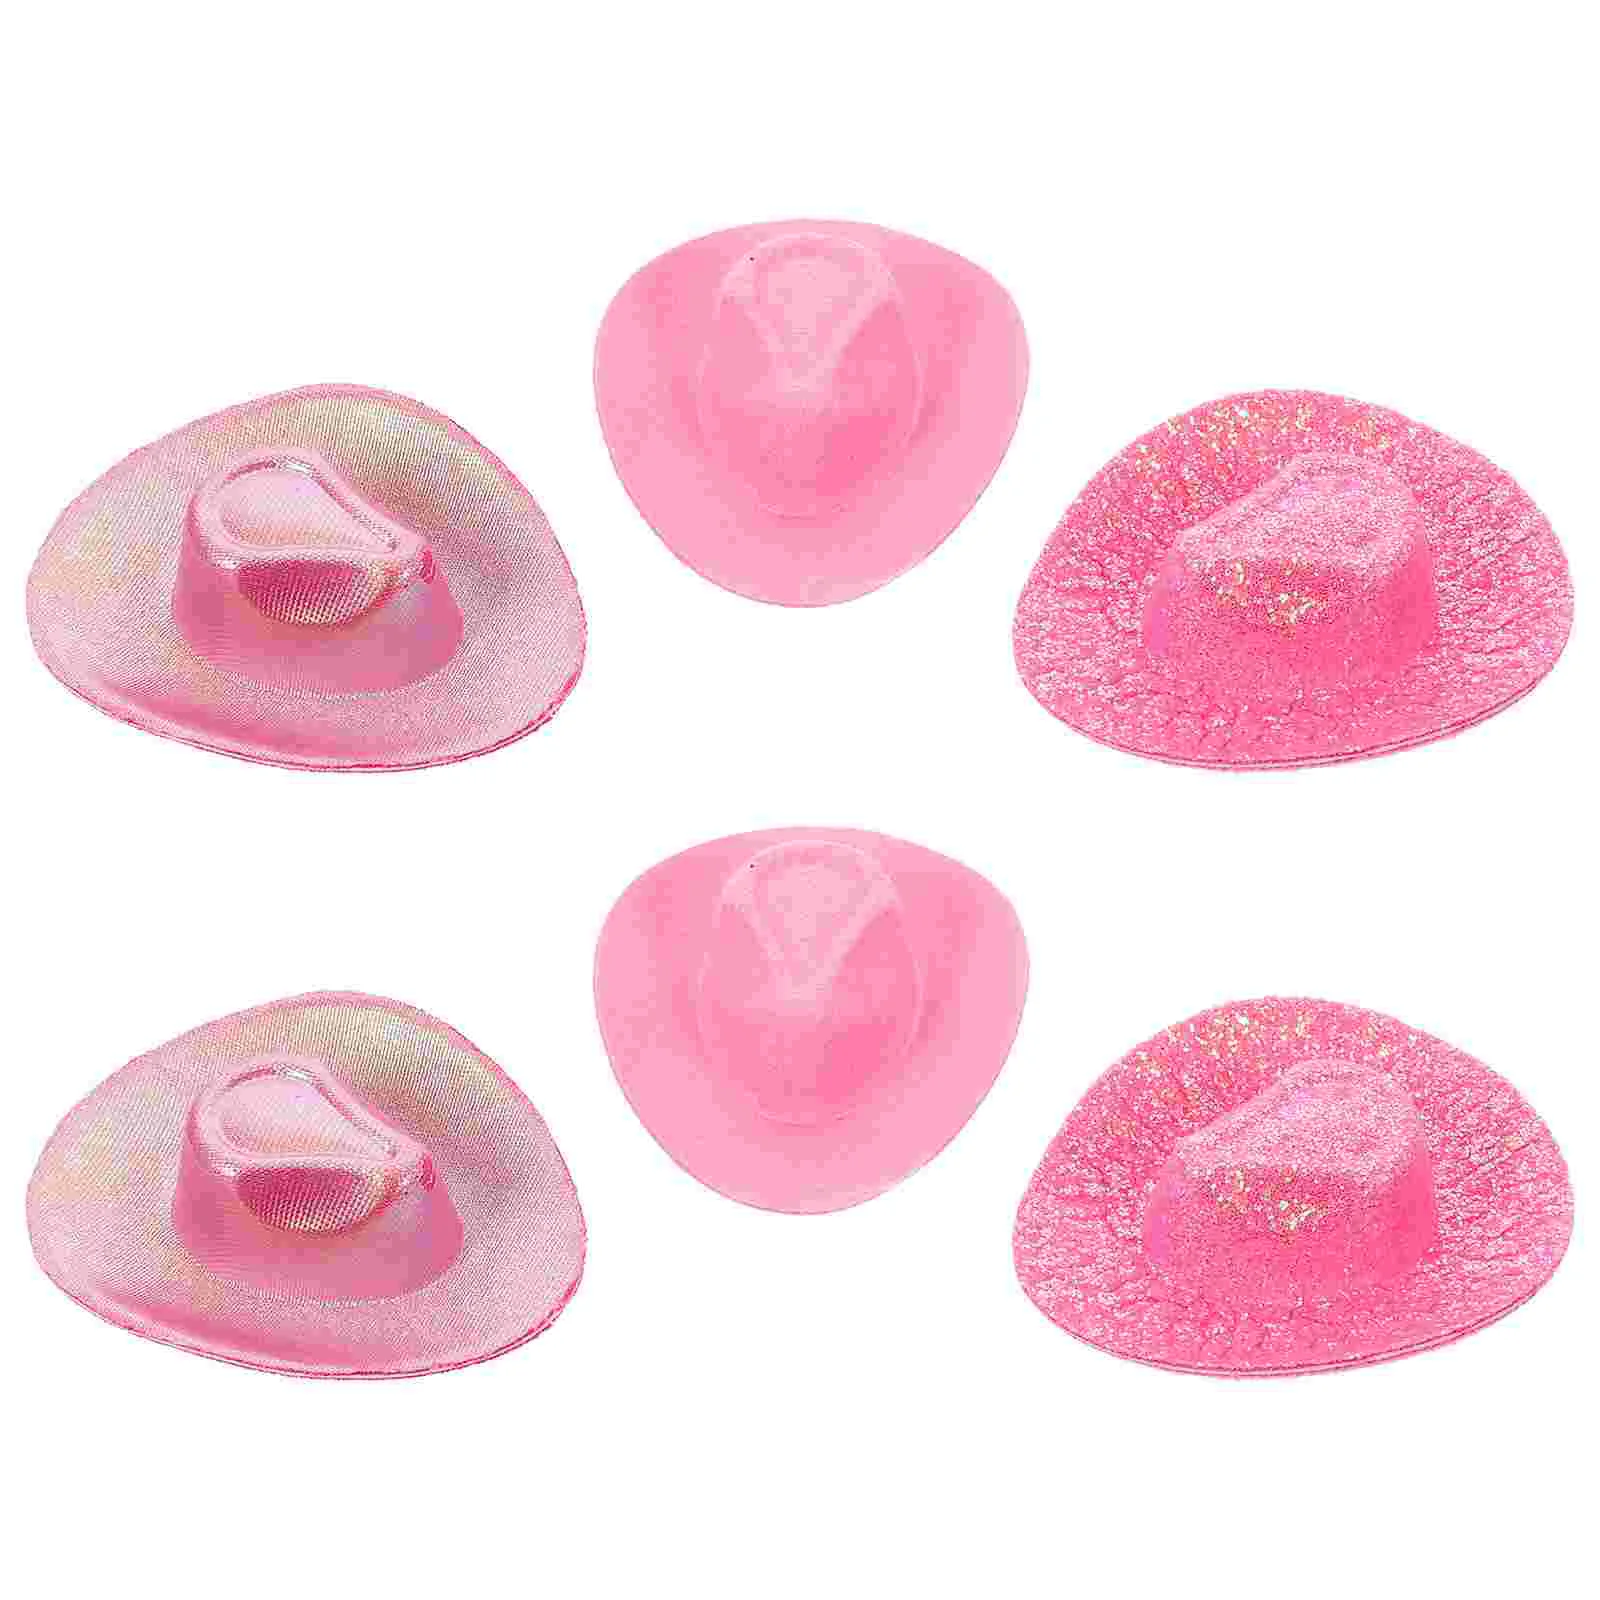 

6 Pcs Mini Hat Miniature Hats Party Adorable Replaceable Ornaments Baby Cake Decors Tiny Felt Cloth Delicate Small